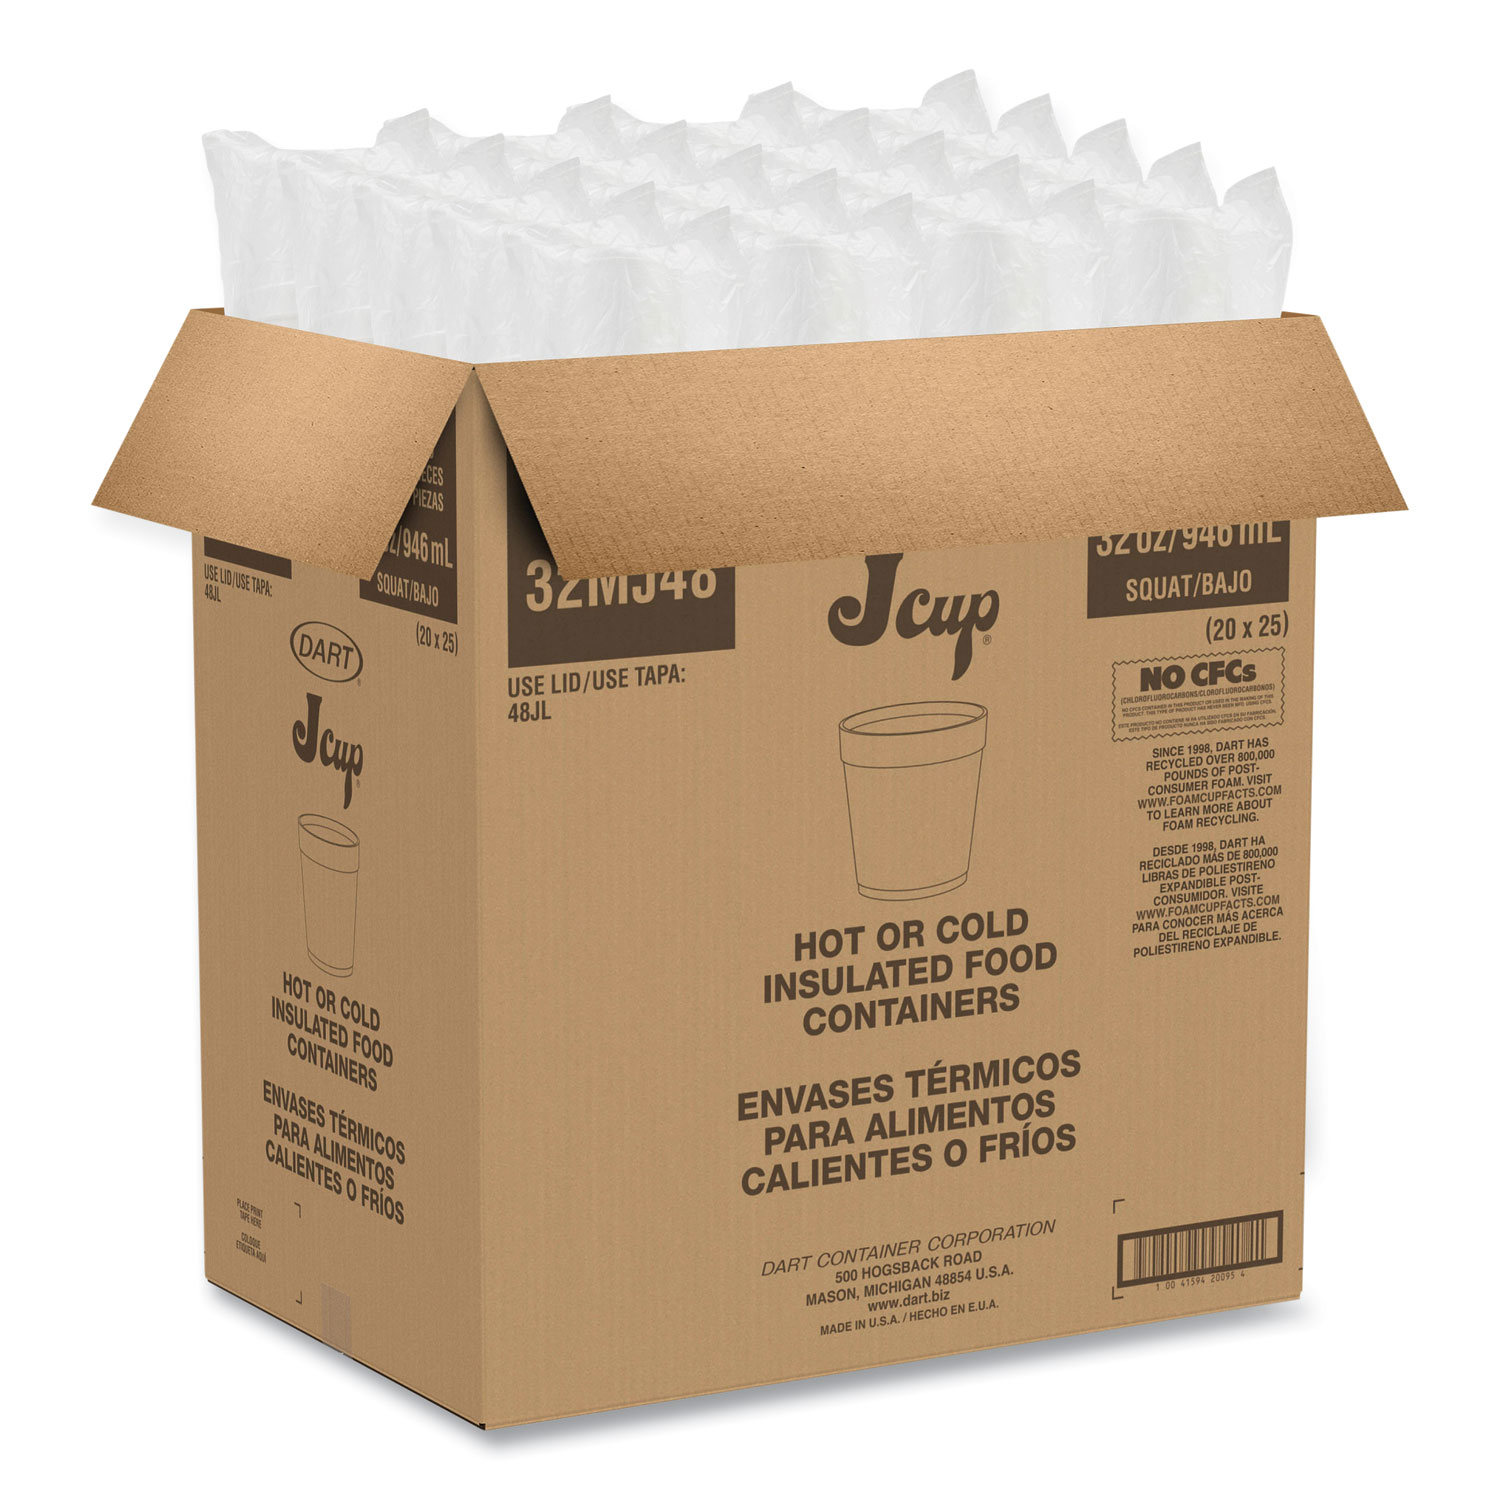 Dart Foam Containers, 16 oz, White, 25/Bag, 20 Bags/Carton